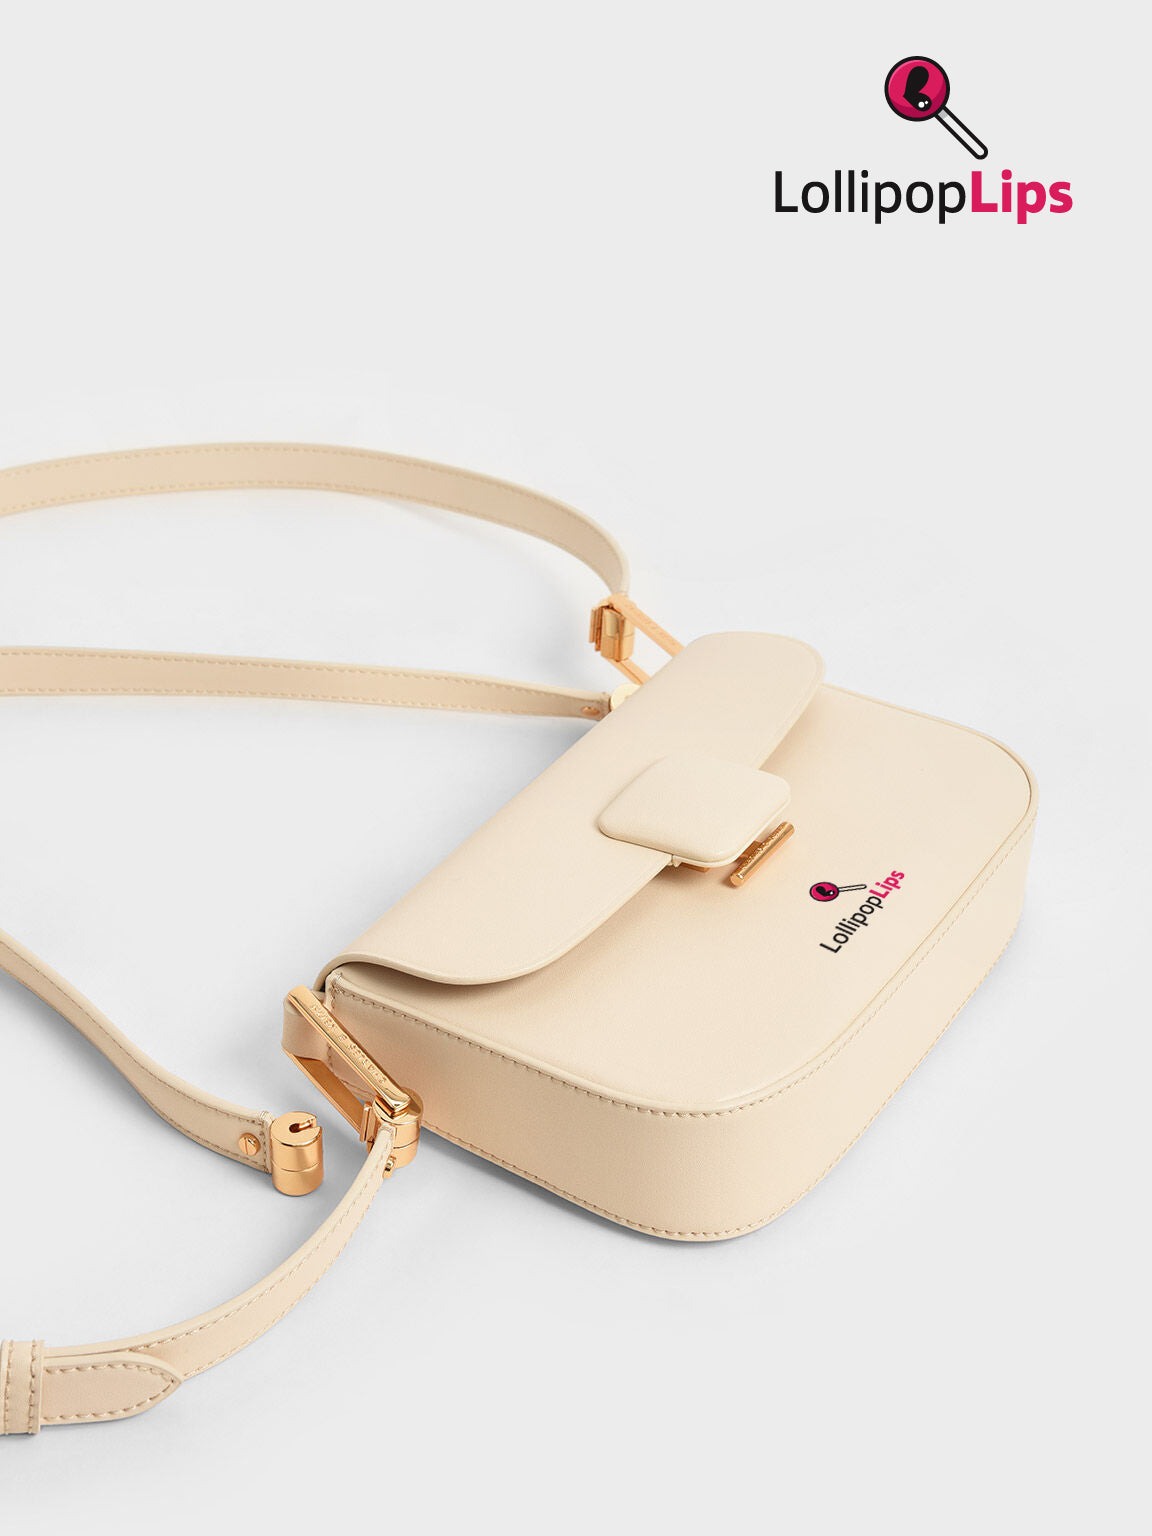 LOLLIPOPLIPS™- Koa Square Push-Lock Shoulder Bag - Beige